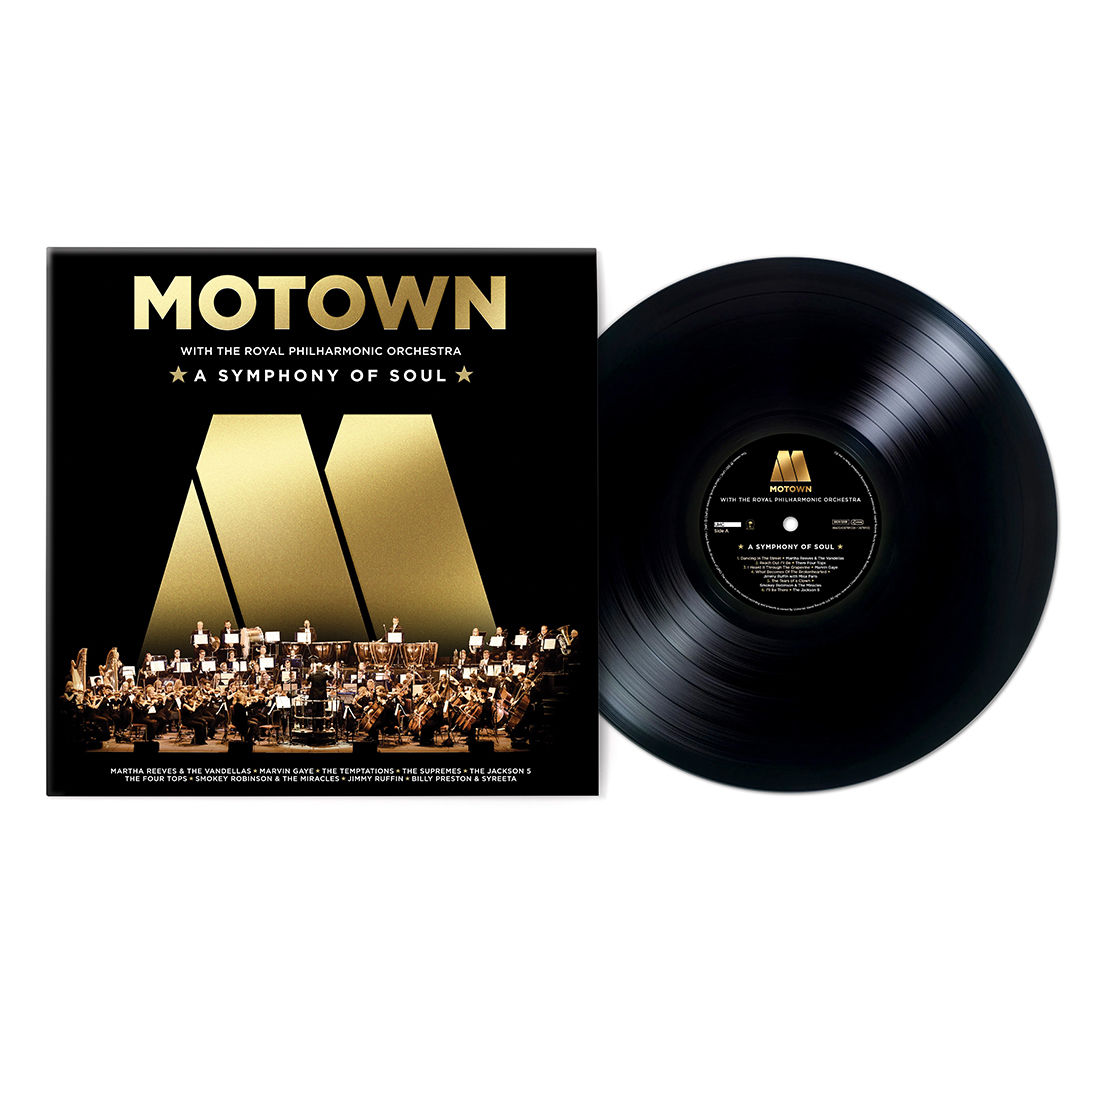 Royal Philharmonic Orchestra - Motown: A Symphony Of Soul (with the Royal Philharmonic Orchestra): Vinyl LP